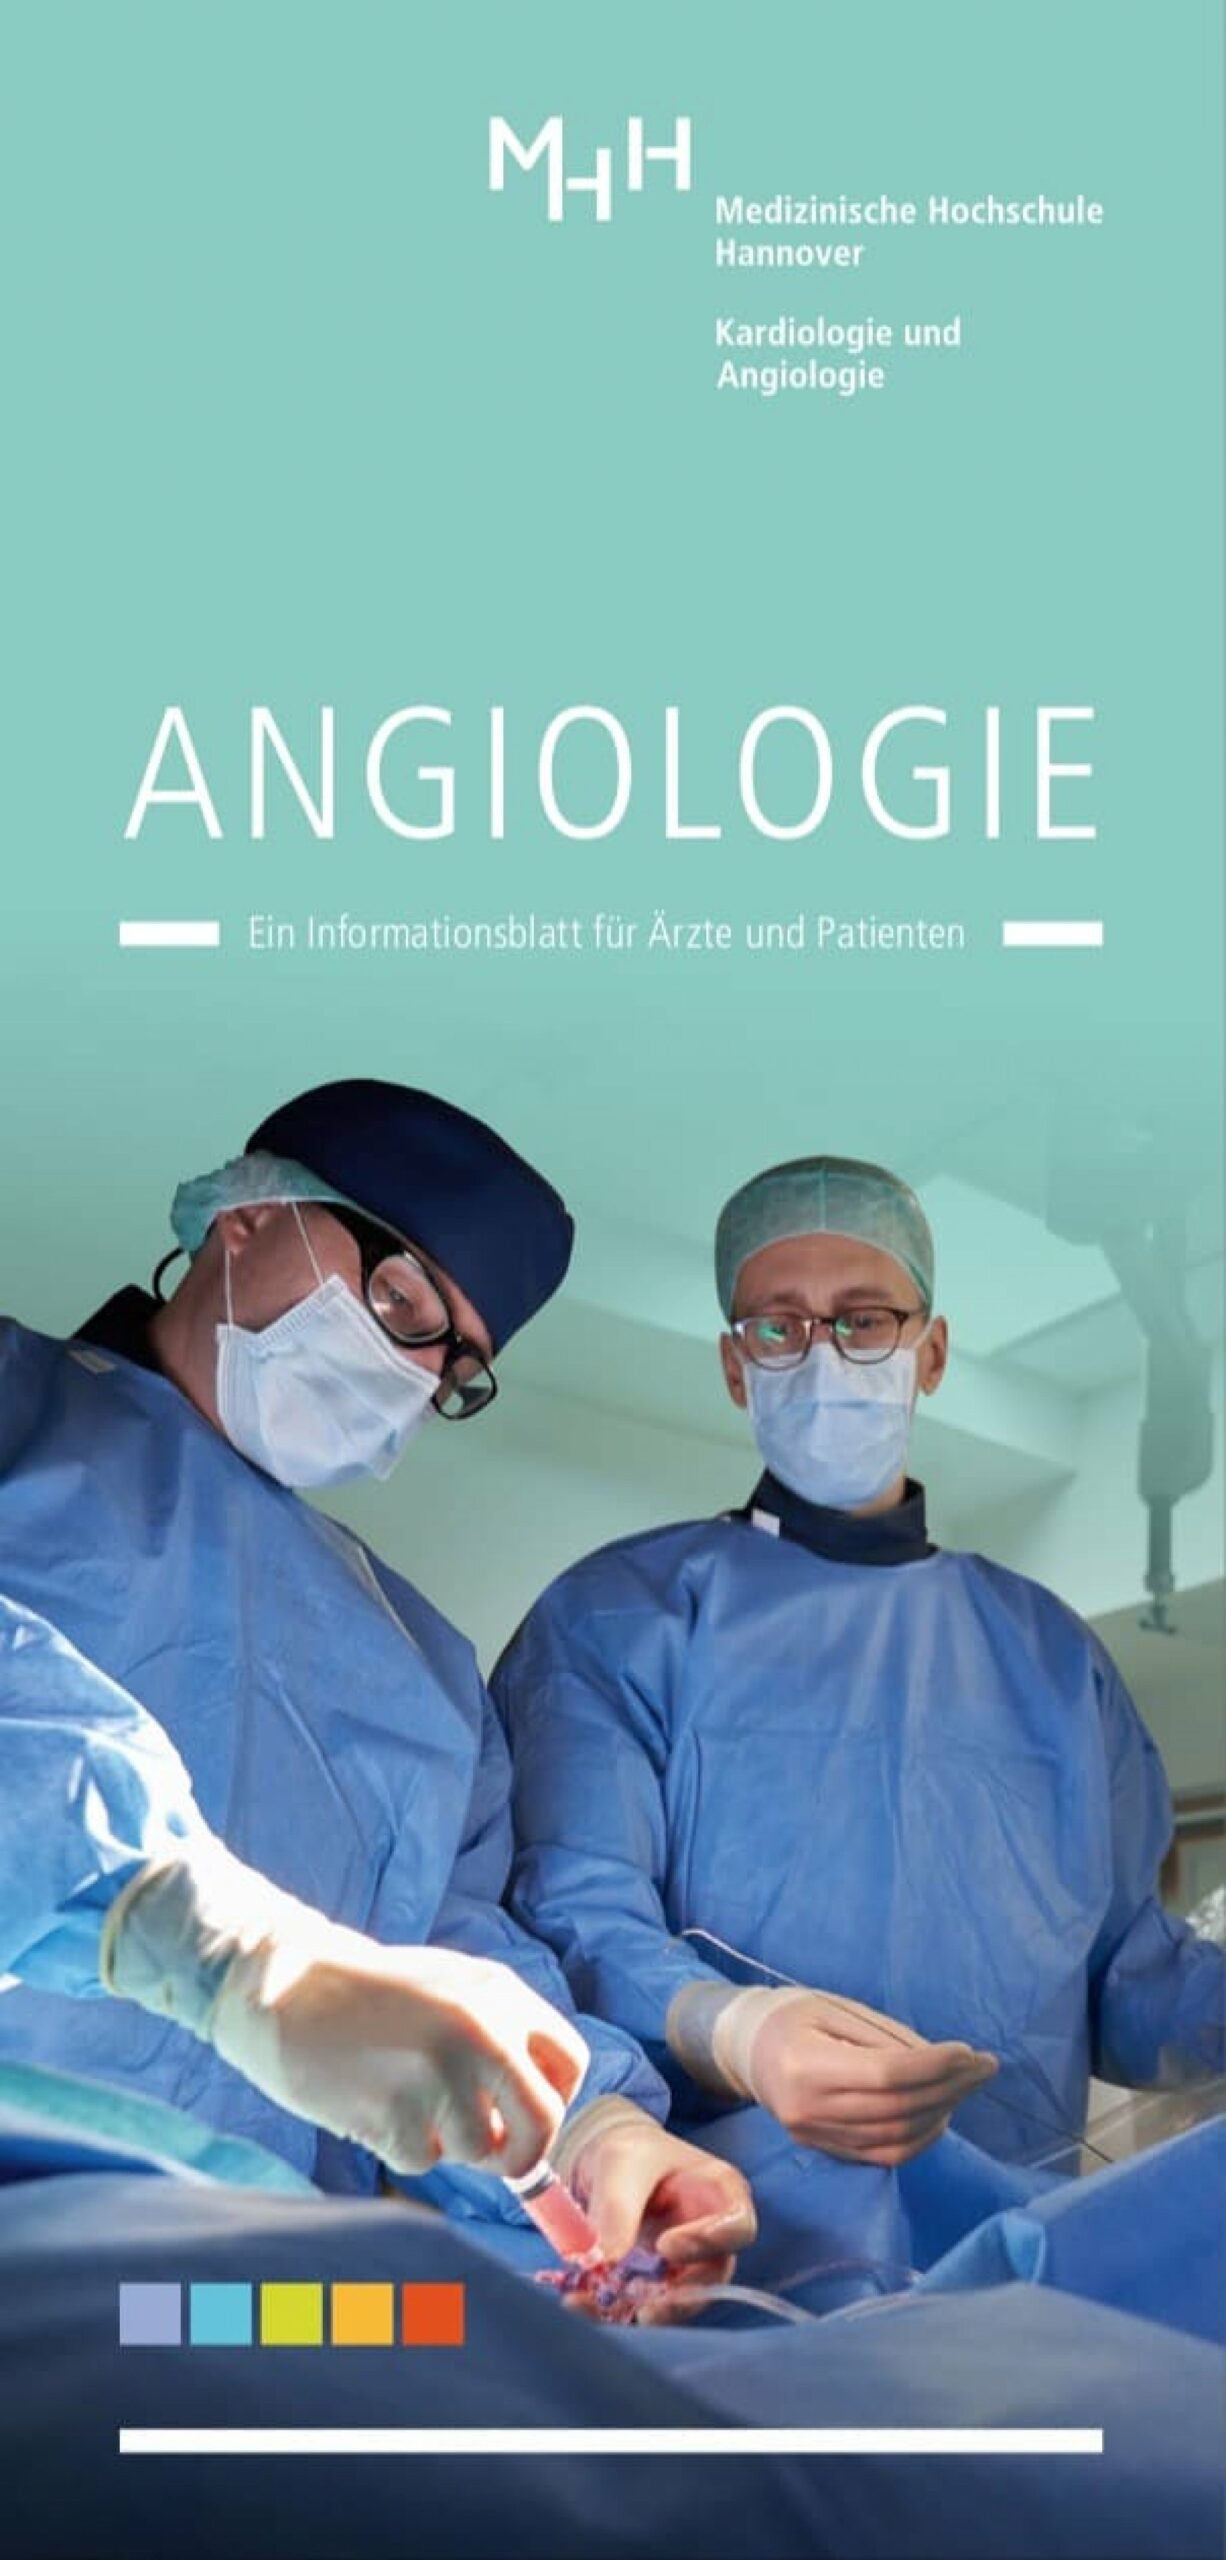 MHH_Angiologie_Flyer_2020.JPEG-f5e70072